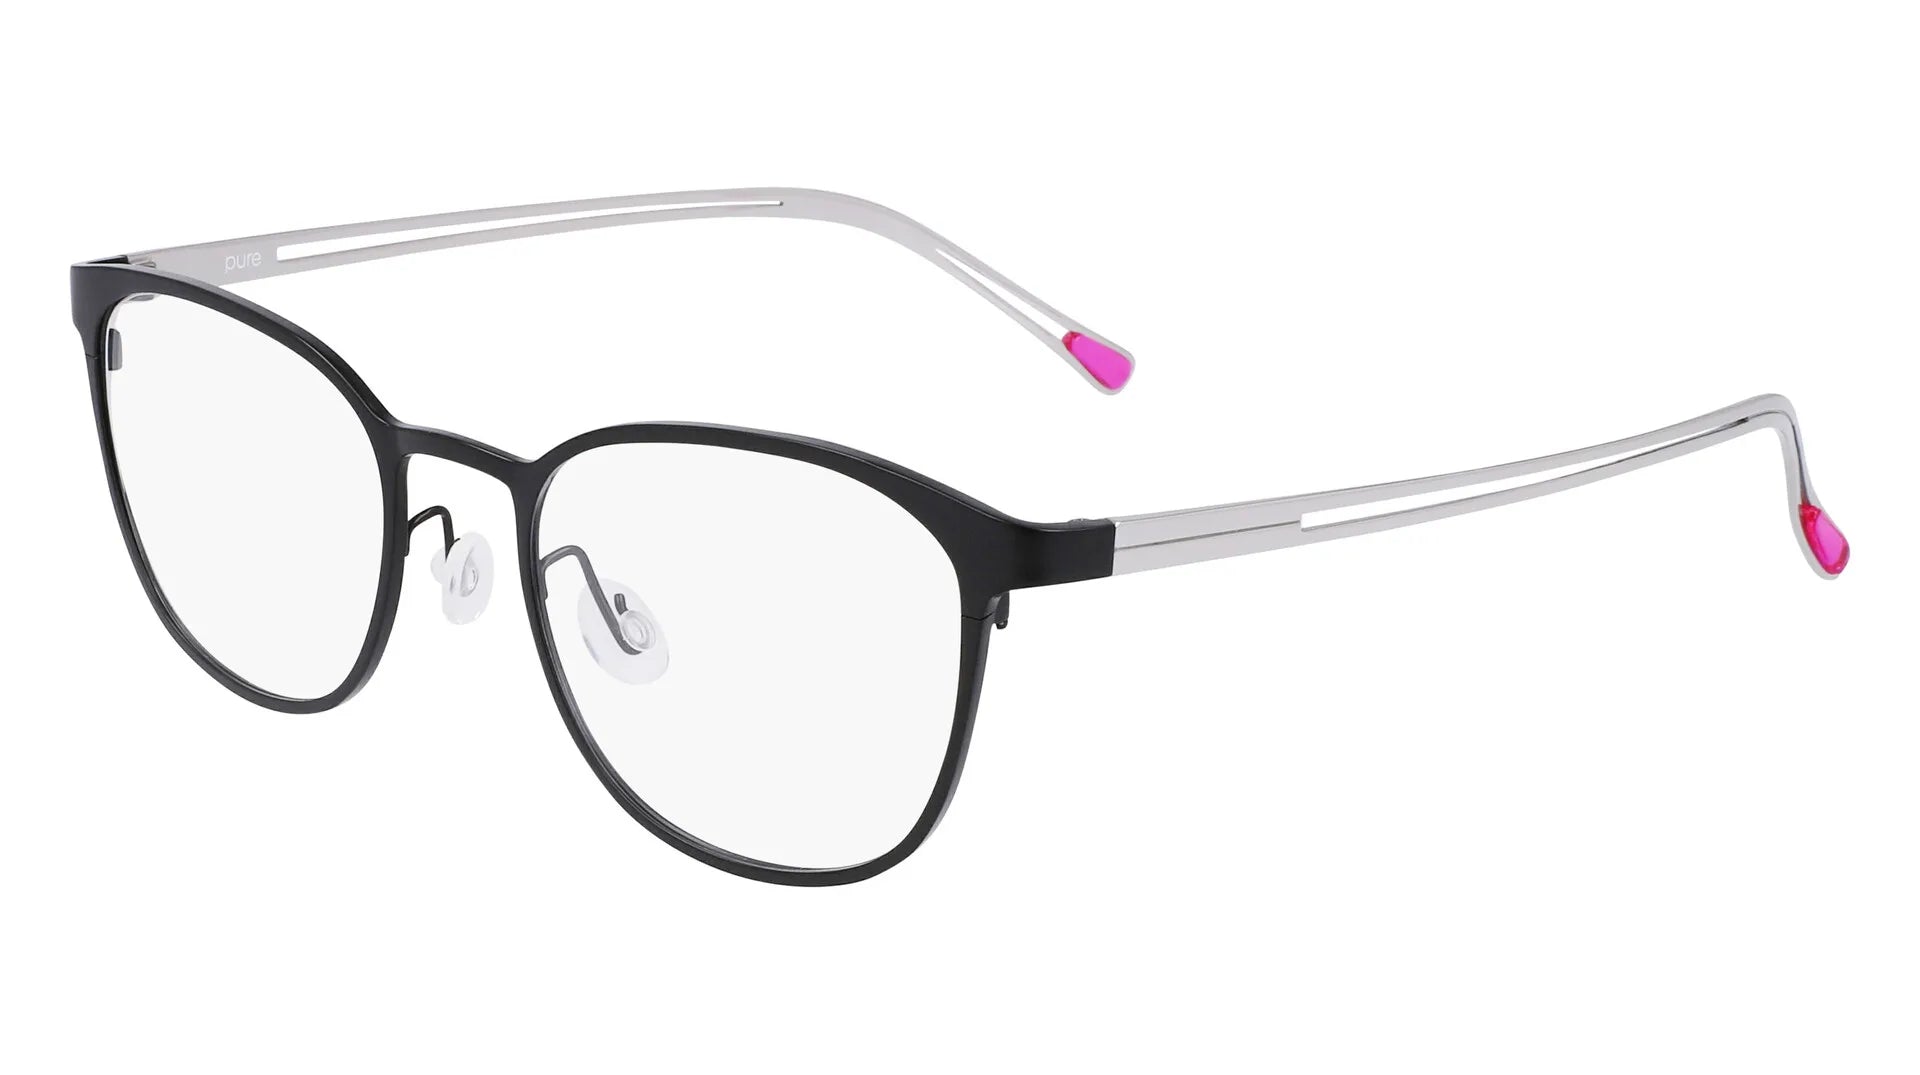 Pure P-4014 Eyeglasses Matte Black / Silver